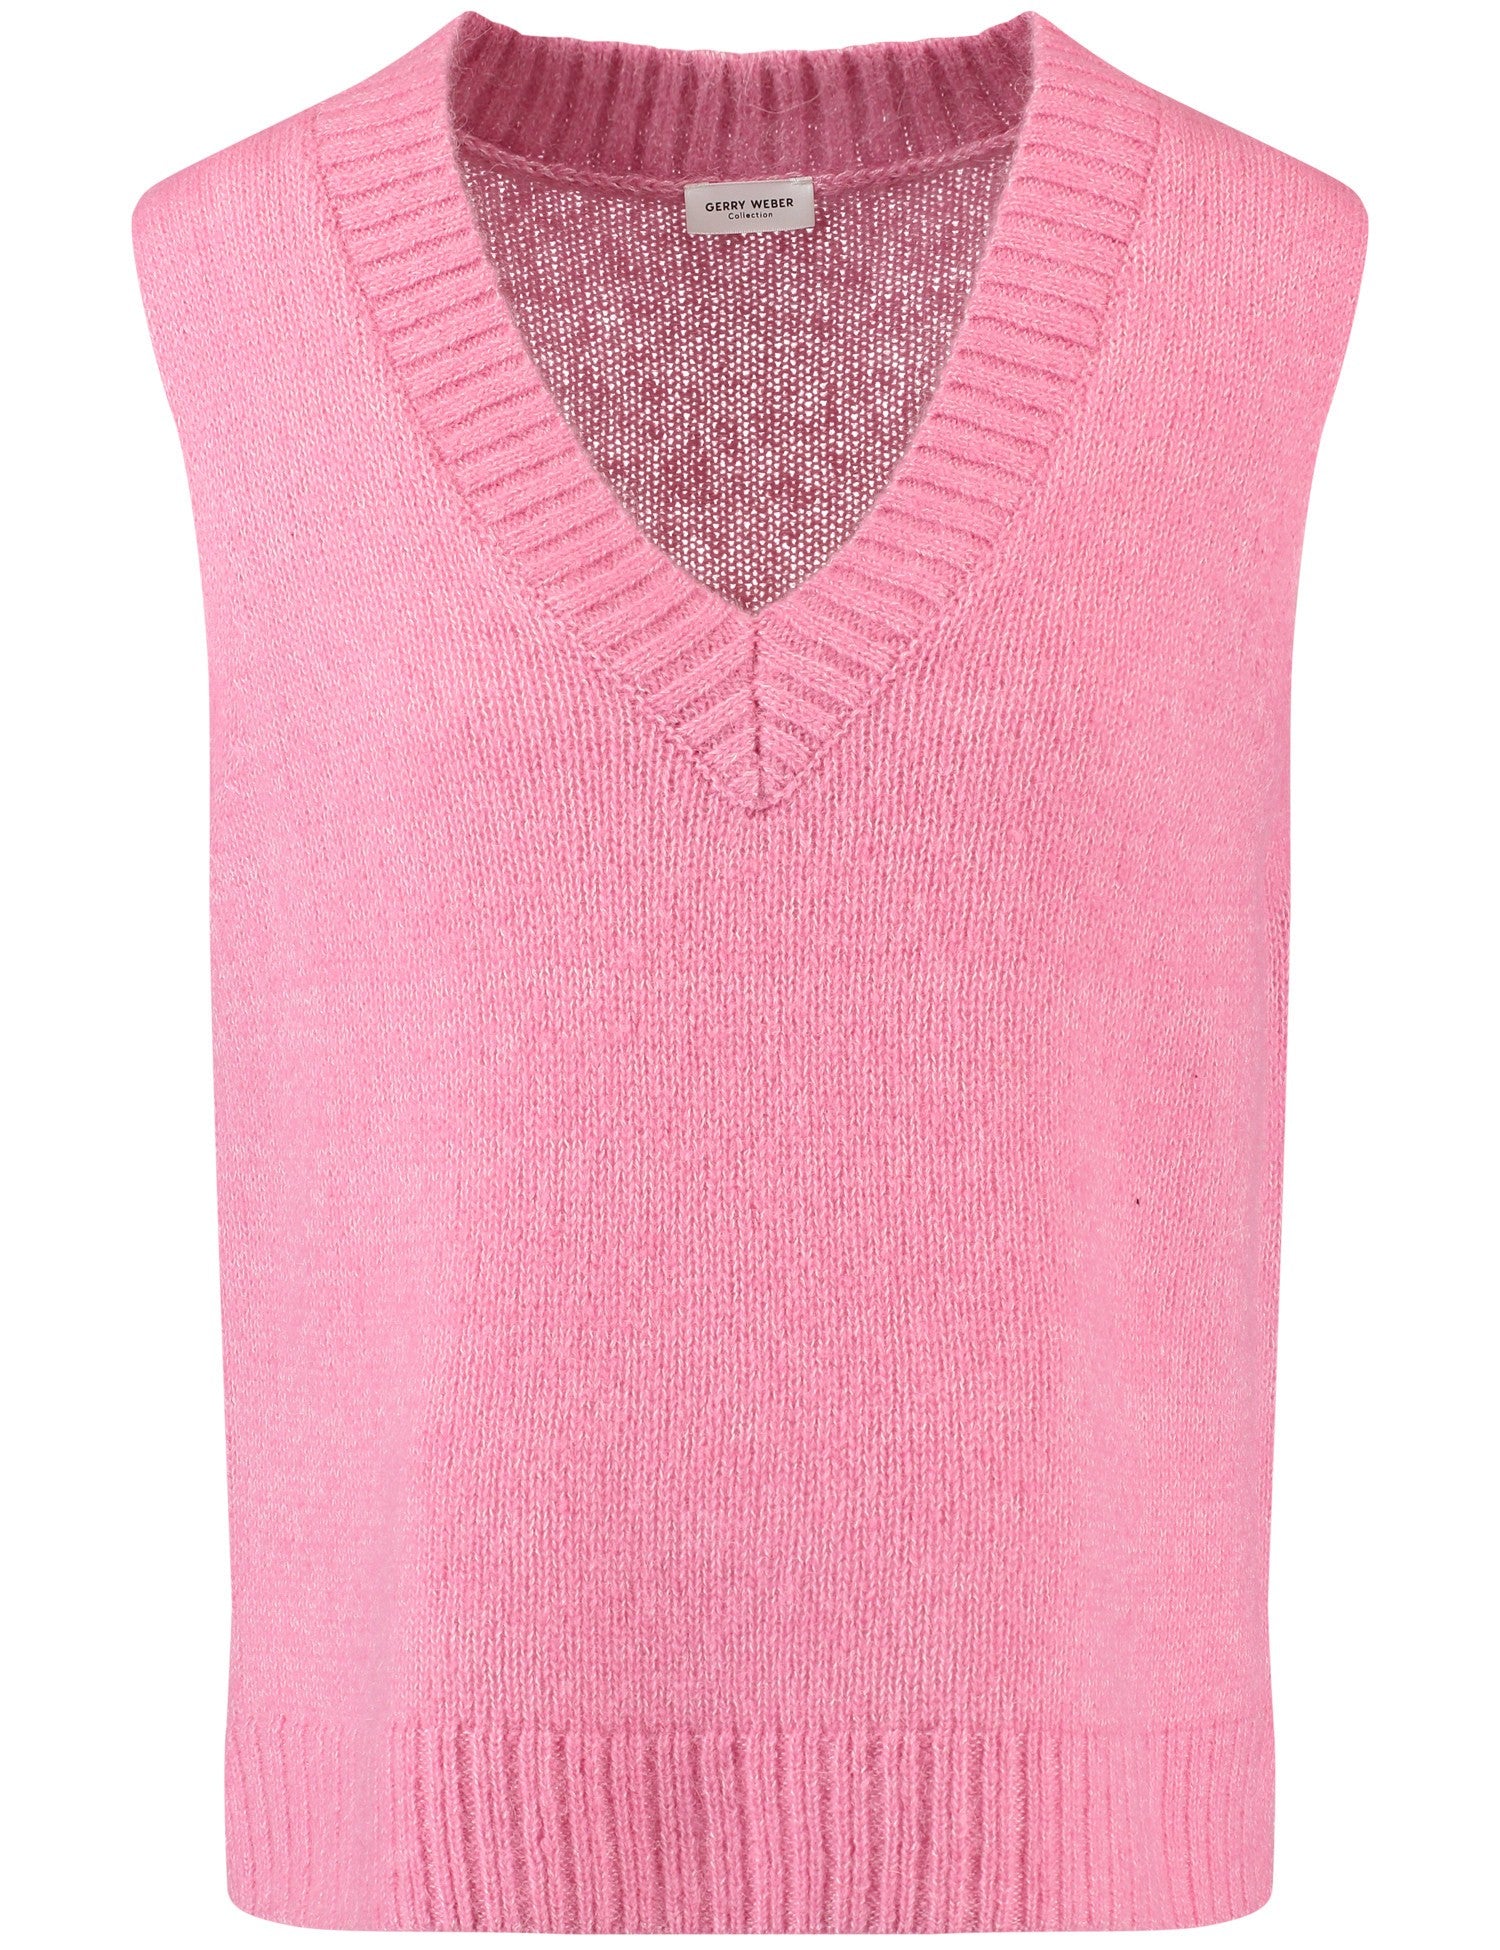 Gerry Weber Pink Slipover Knitted Vest